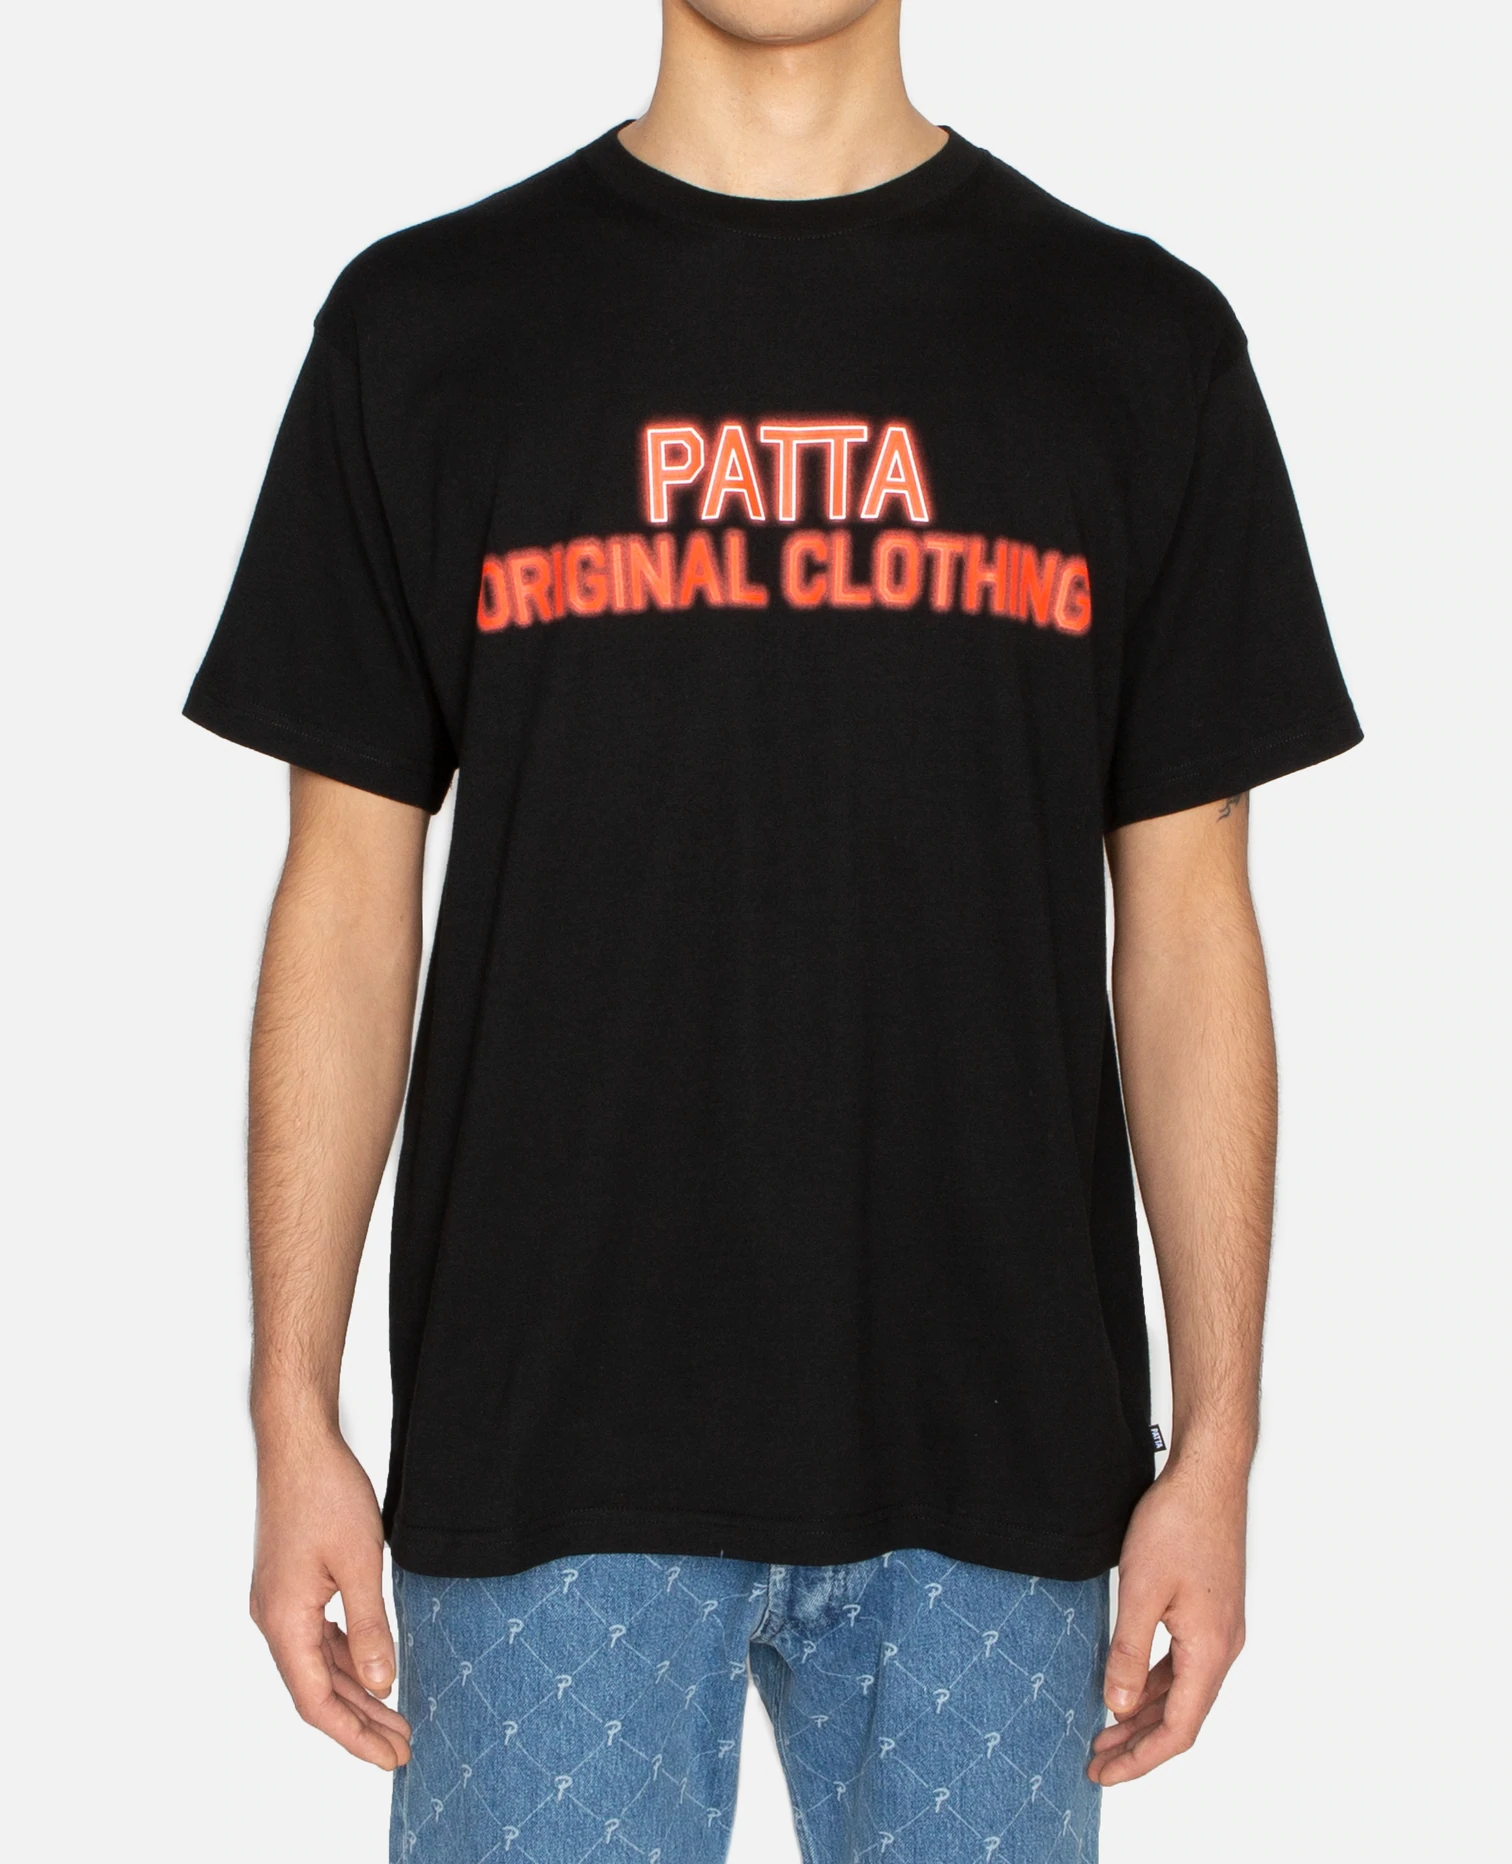 outfit picks week 20 Patta Neon T-Shirt